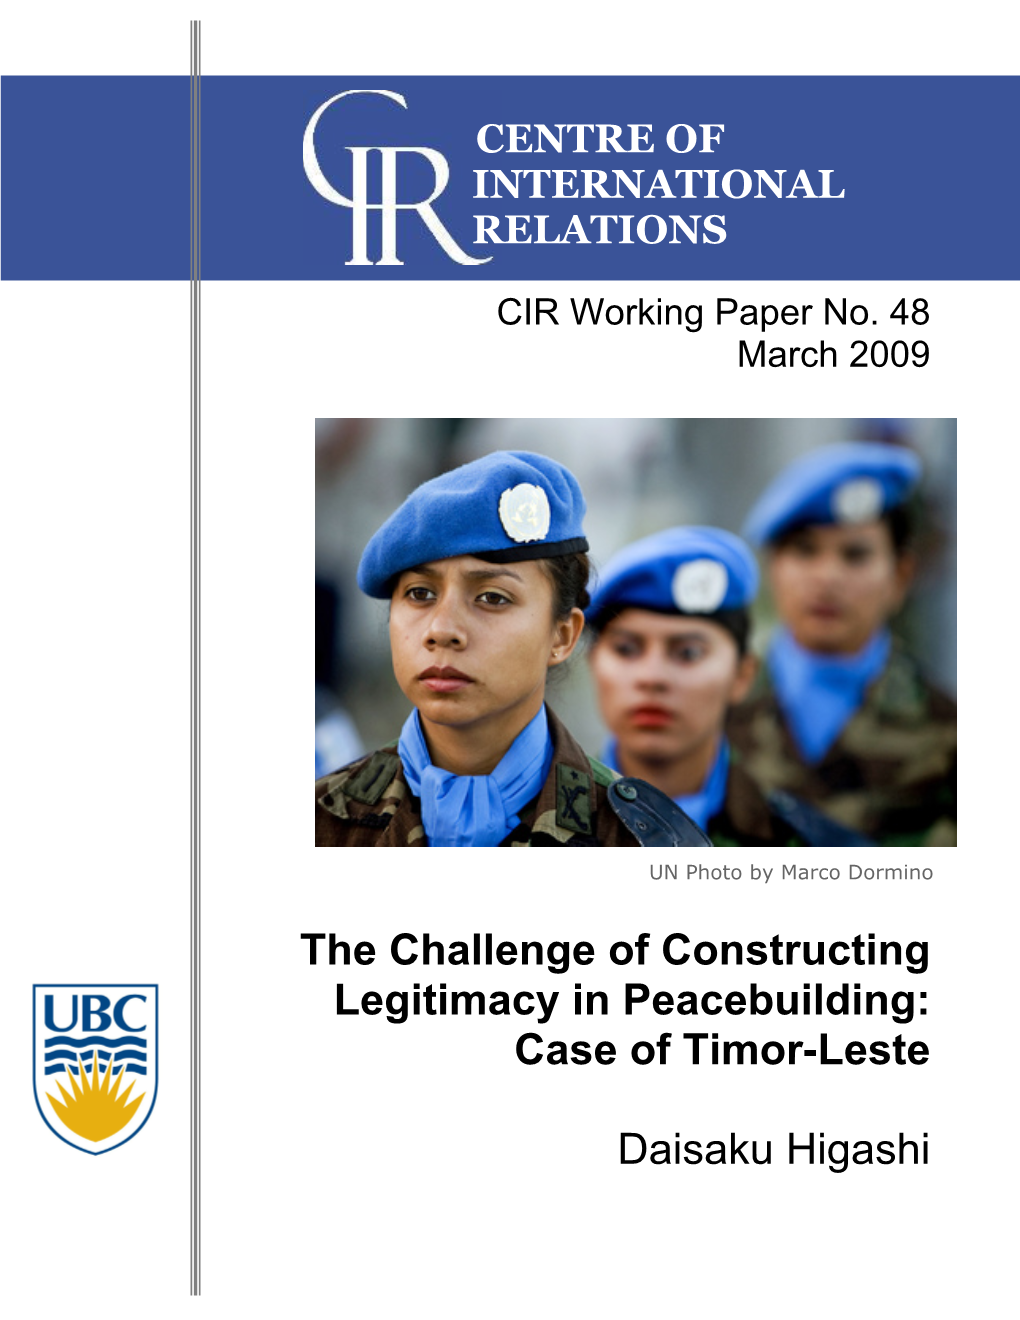 The Challenge of Constructing Legitimacy in Peacebuilding: Case of Timor-Leste